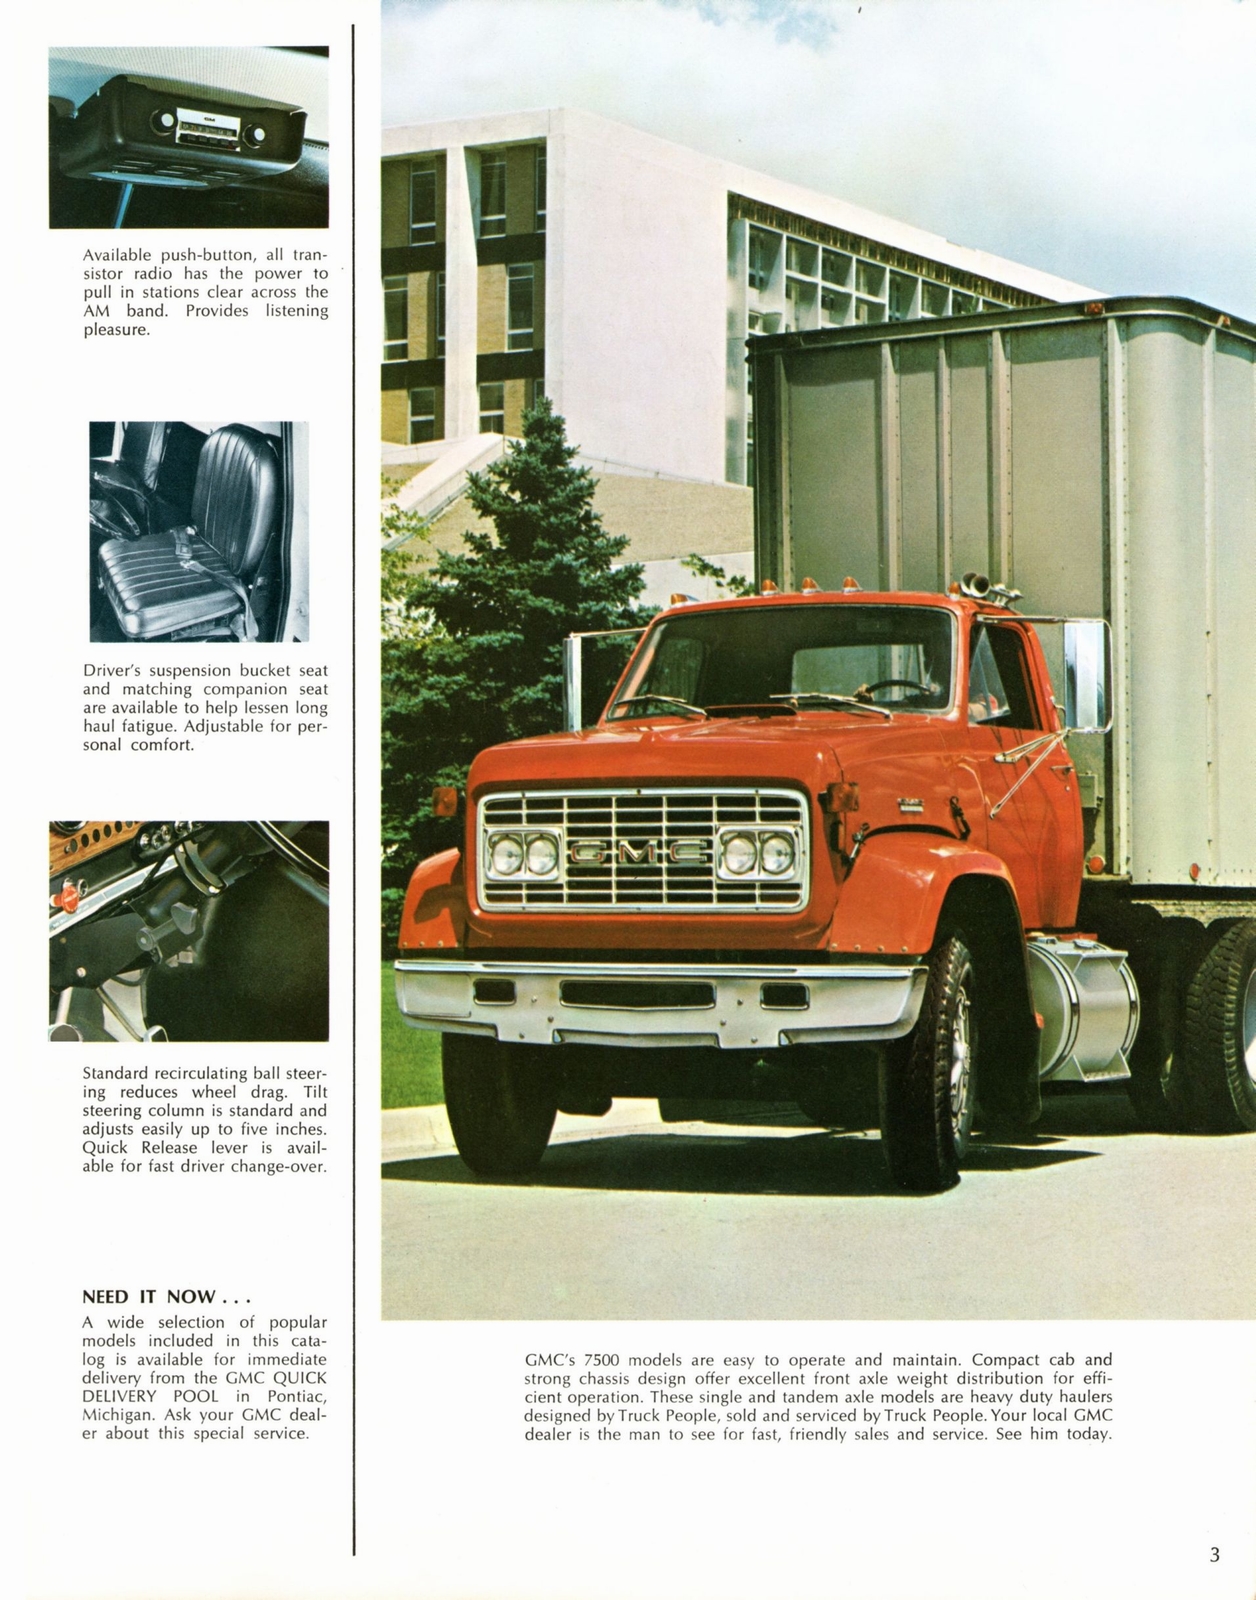 n_1973 GMC Series 7500 Trucks-03.jpg